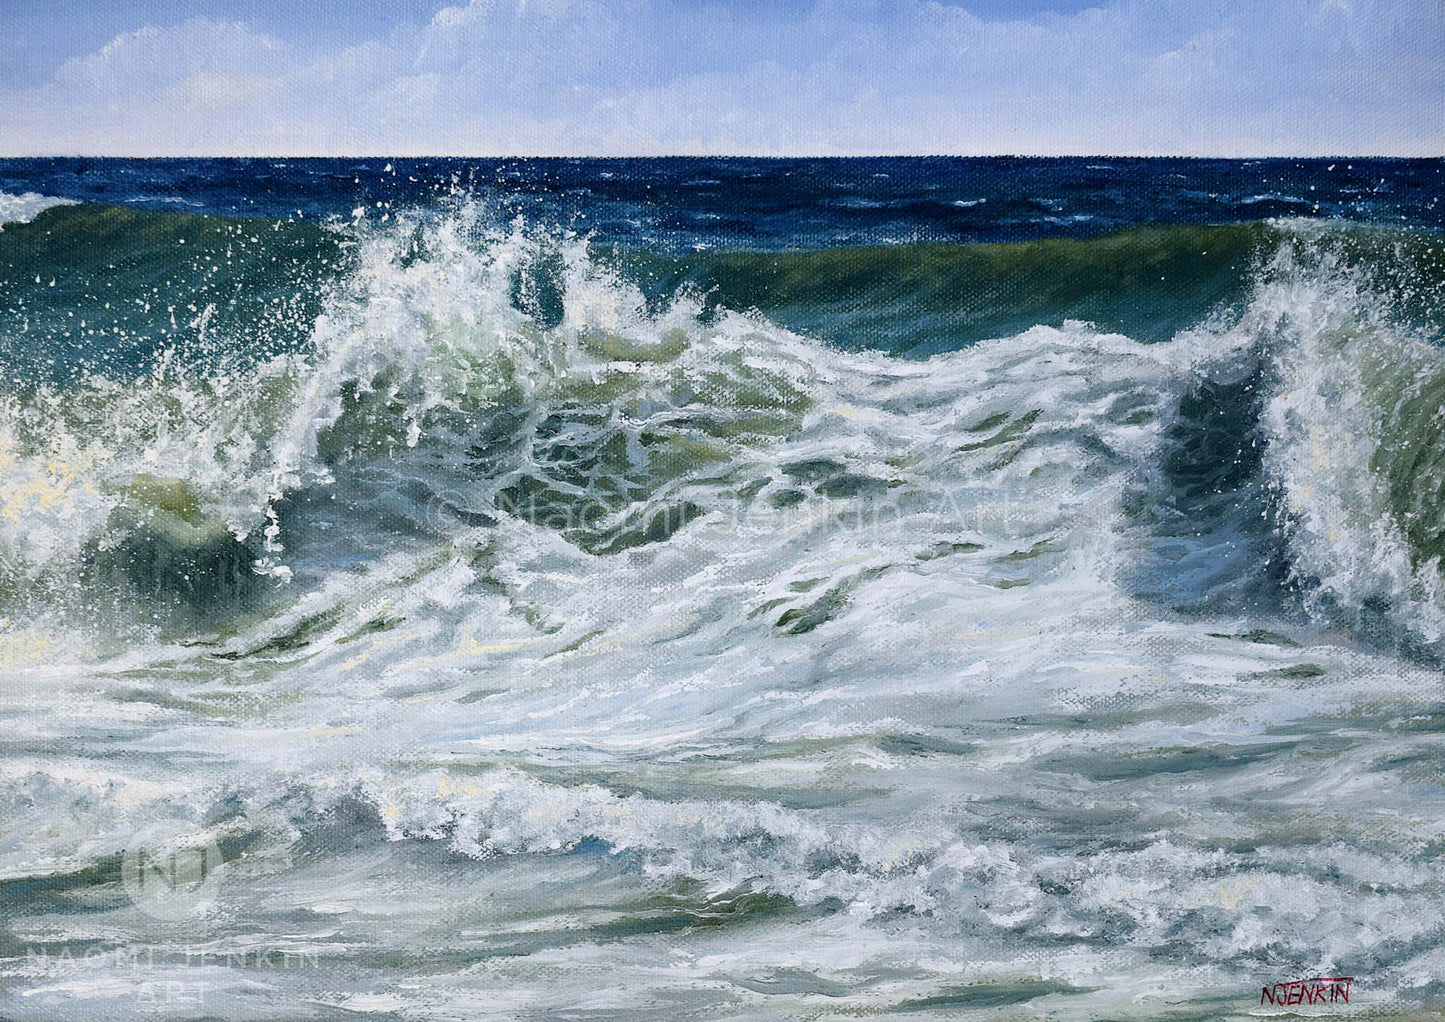 Limited edition 'Foamy Surf” seascape print by Naomi Jenkin Art